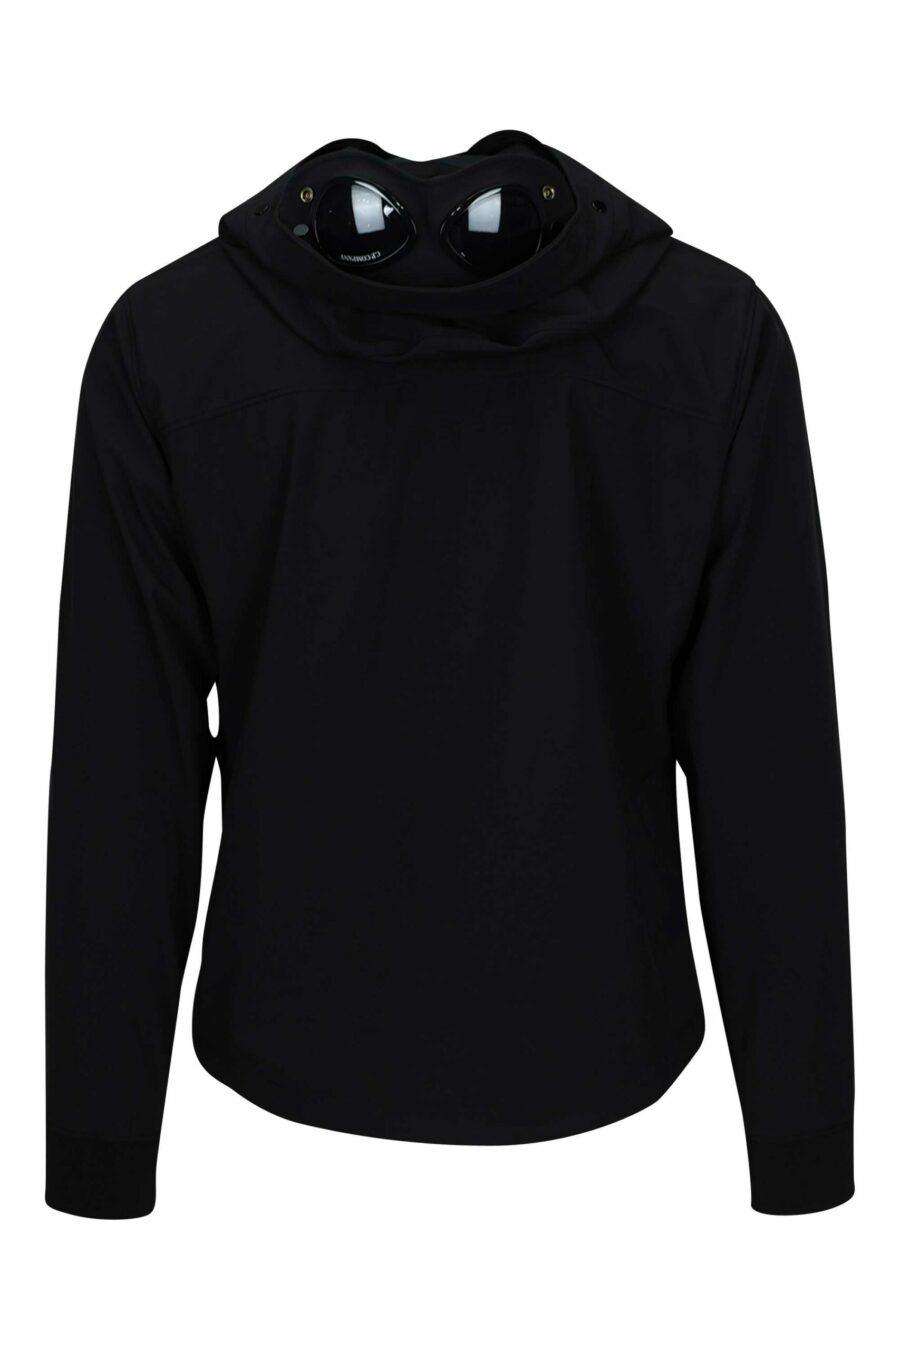 Black jacket with goggle logo and hood - 7620943709728 1 scaled